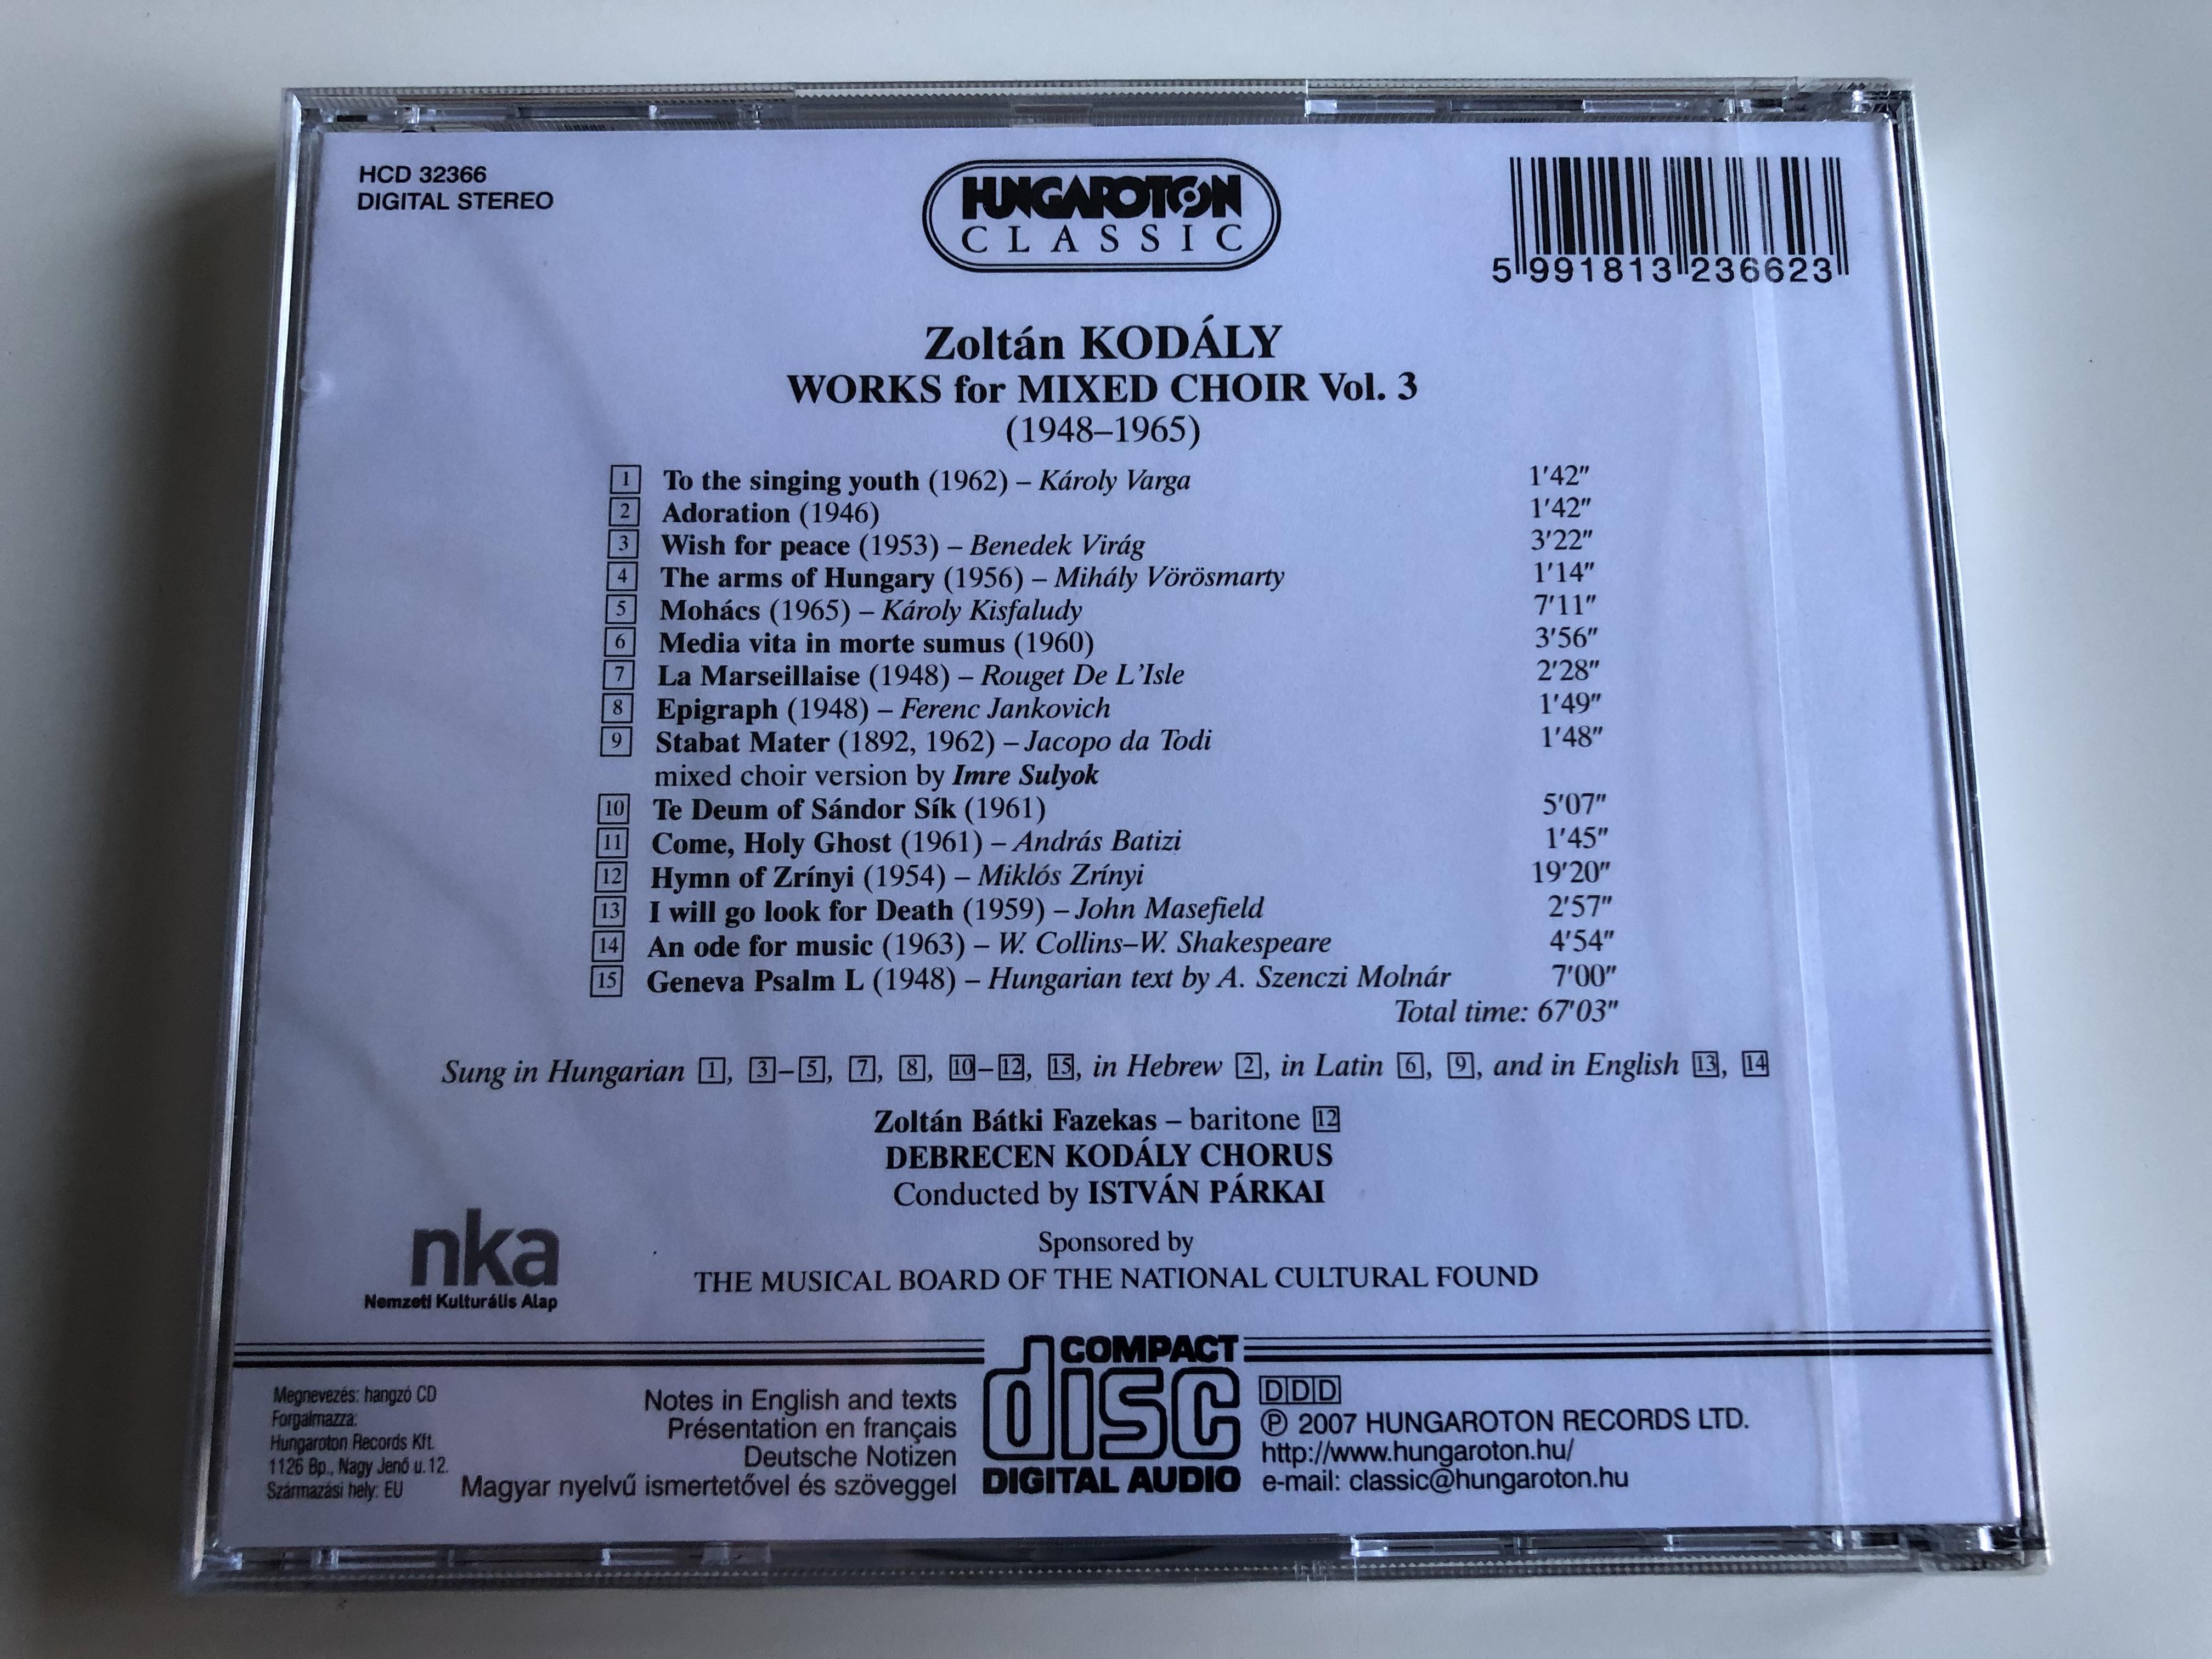 kod-ly-works-for-mixed-choir-vol.-3-1948-1965-debrecen-kodaly-chorus-istvan-parkai-kodaly-choral-works-hungaroton-classic-audio-cd-2007-stereo-hcd-32366-2-.jpg